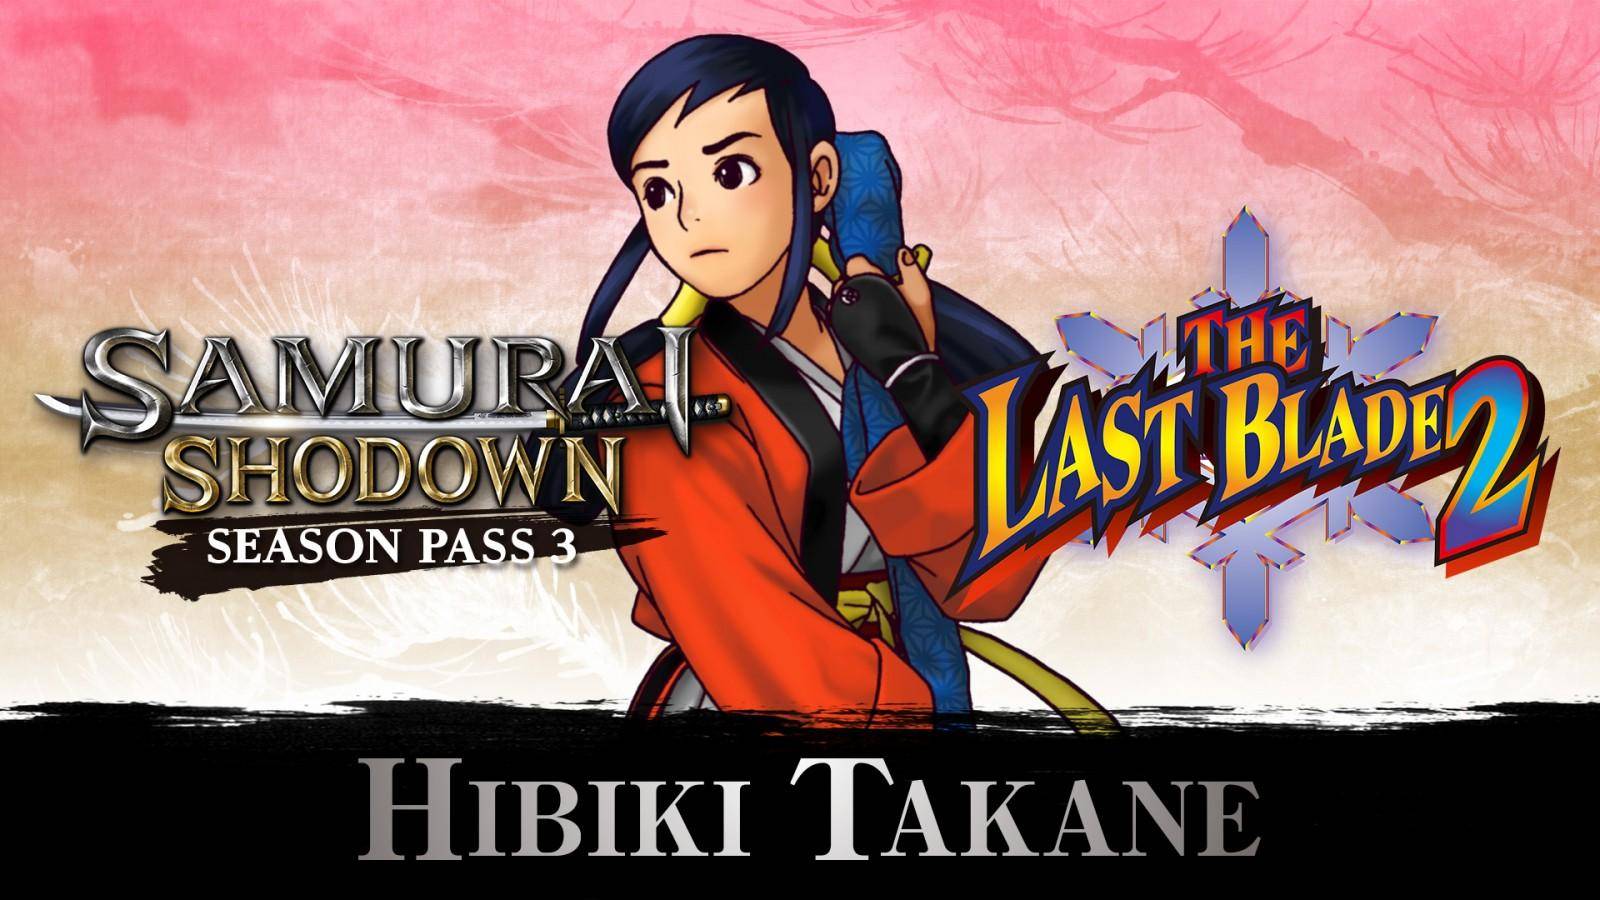 Hibiki Tanake y Cham Cham son los nuevos personajes vía DLC para Samurai Shodown 2